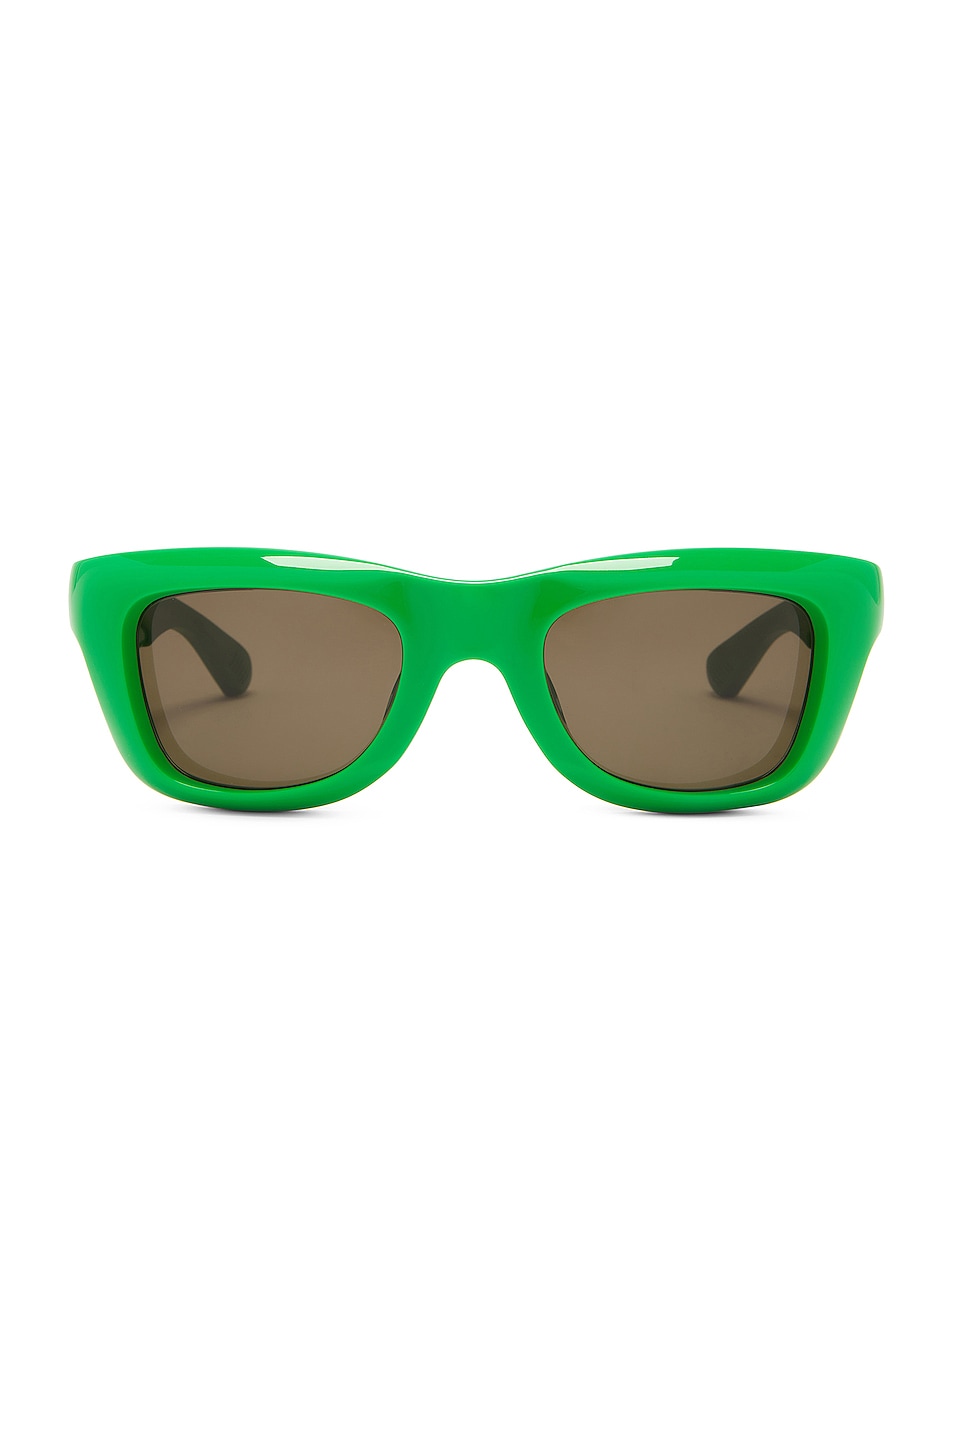 Mix Materials Sunglasses in Green